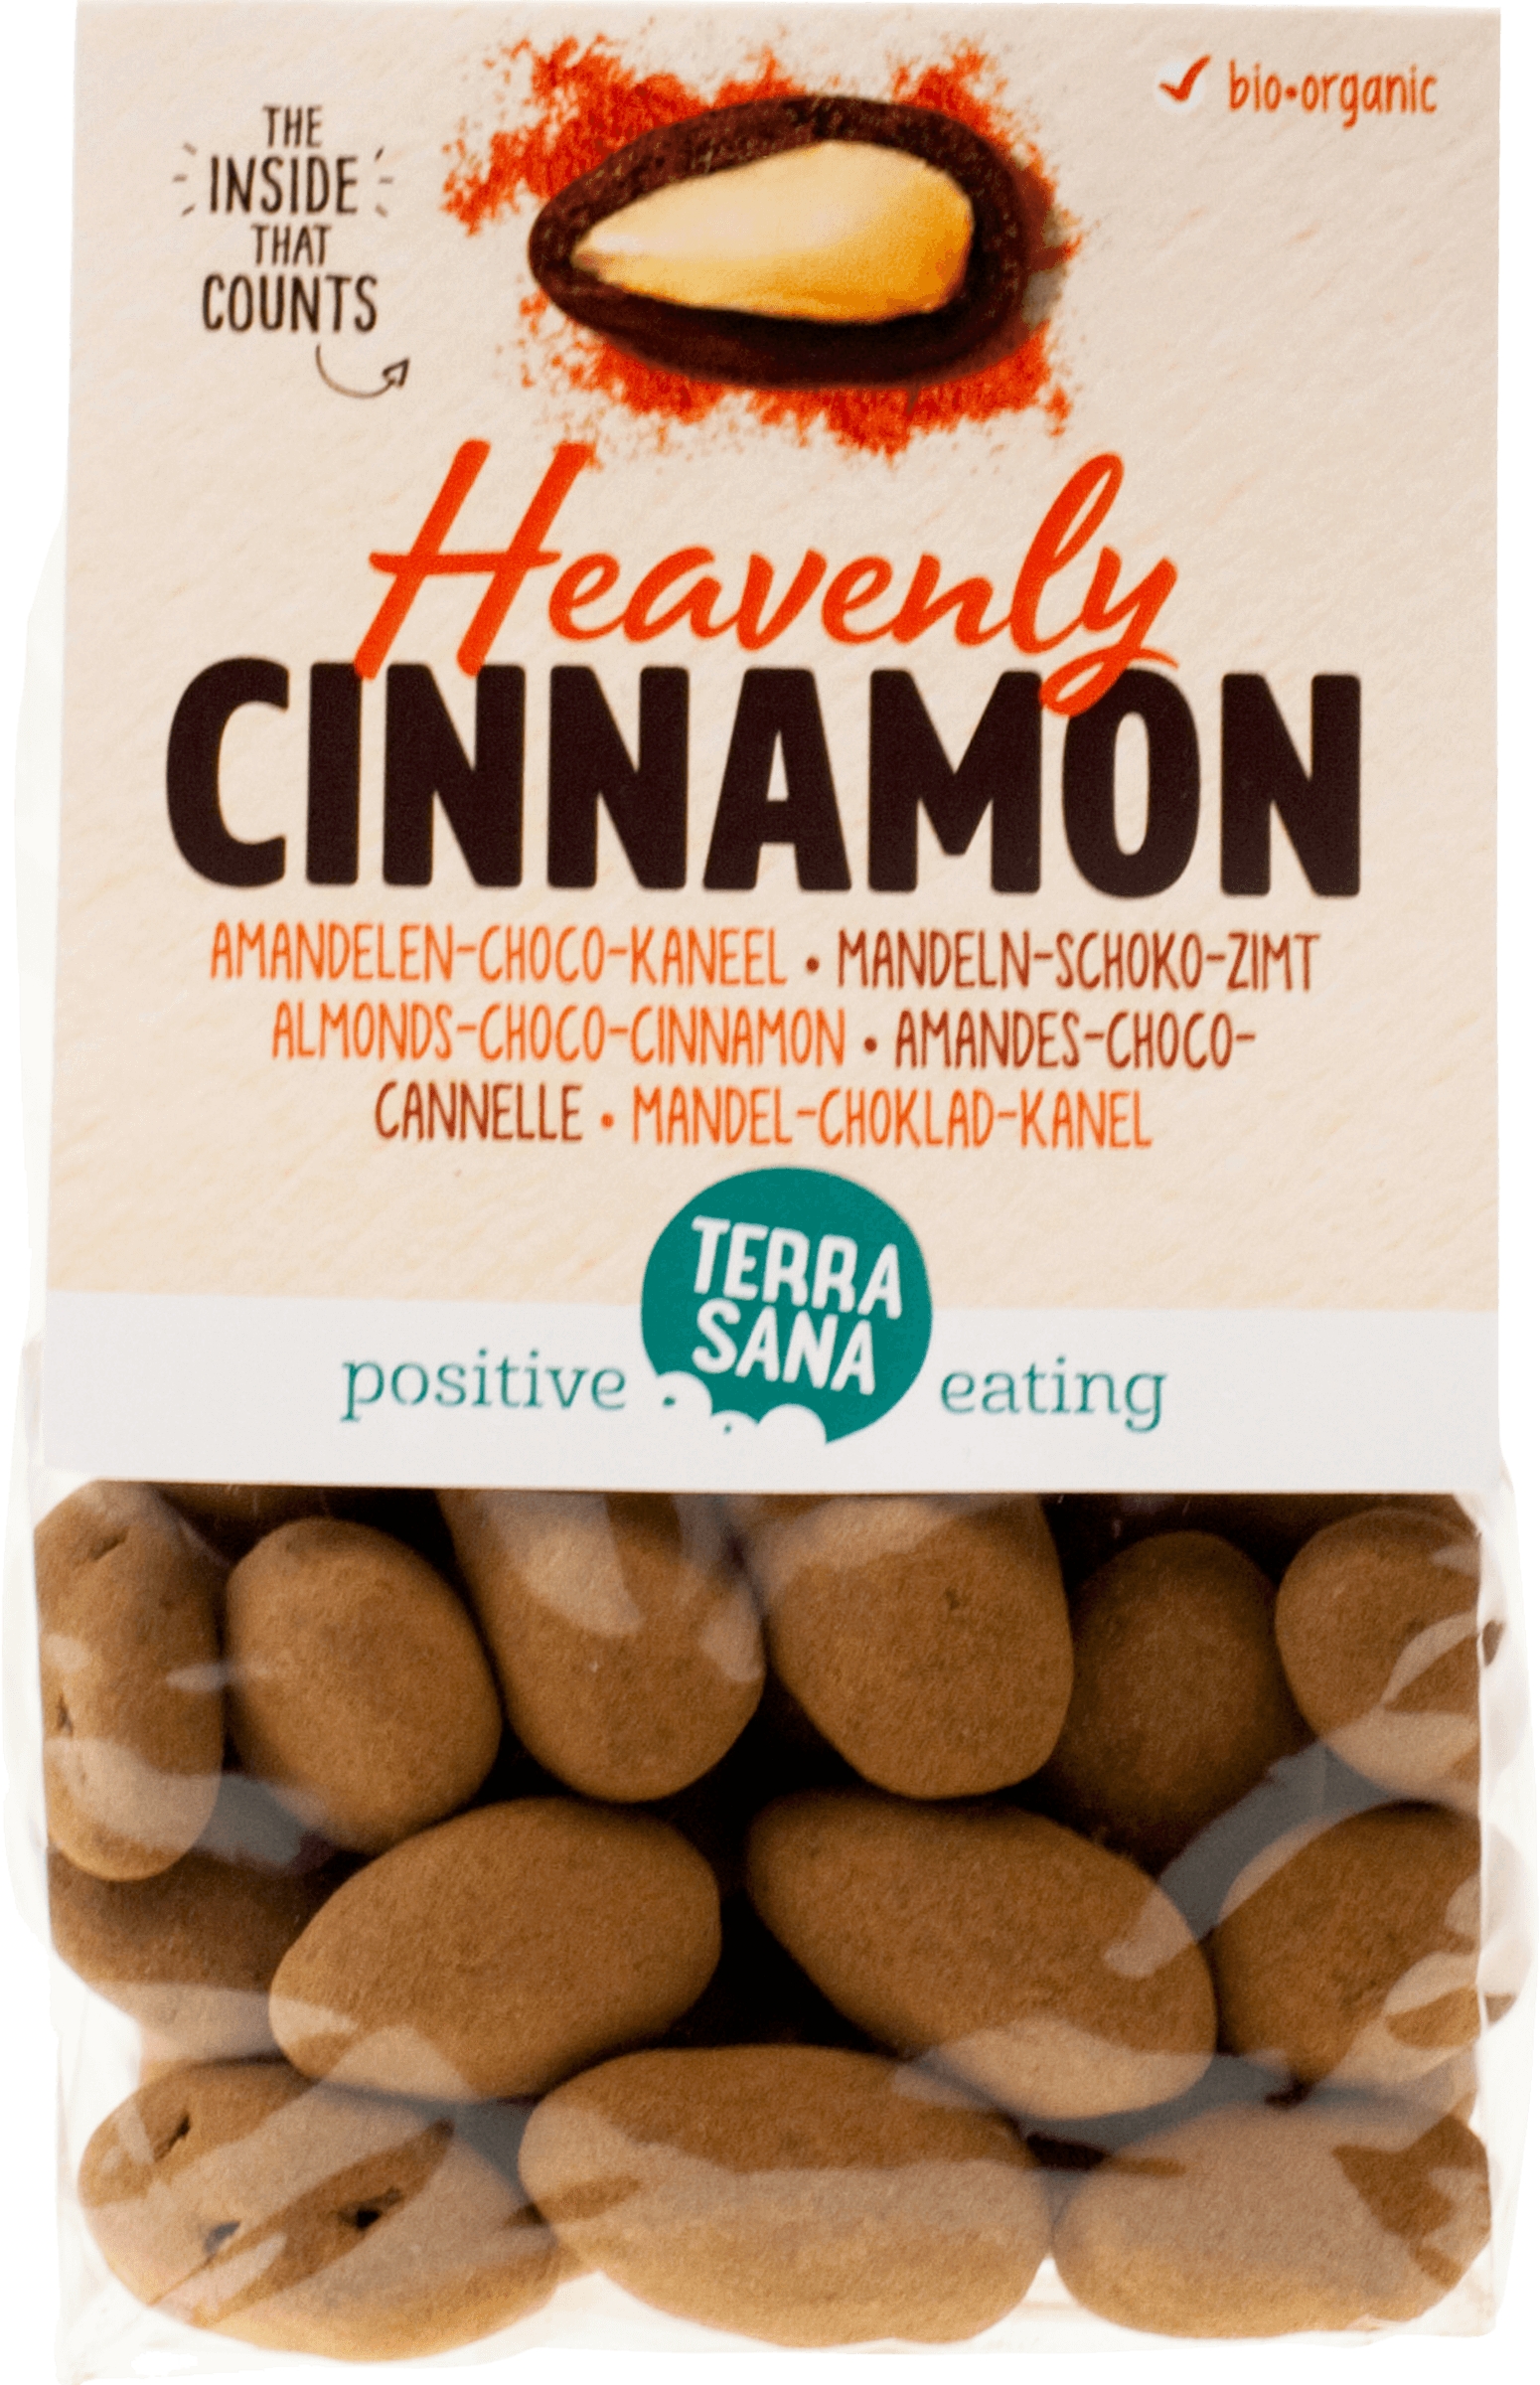 Heavenly Cinnamon (Mandeln-Schoko-Zimt)